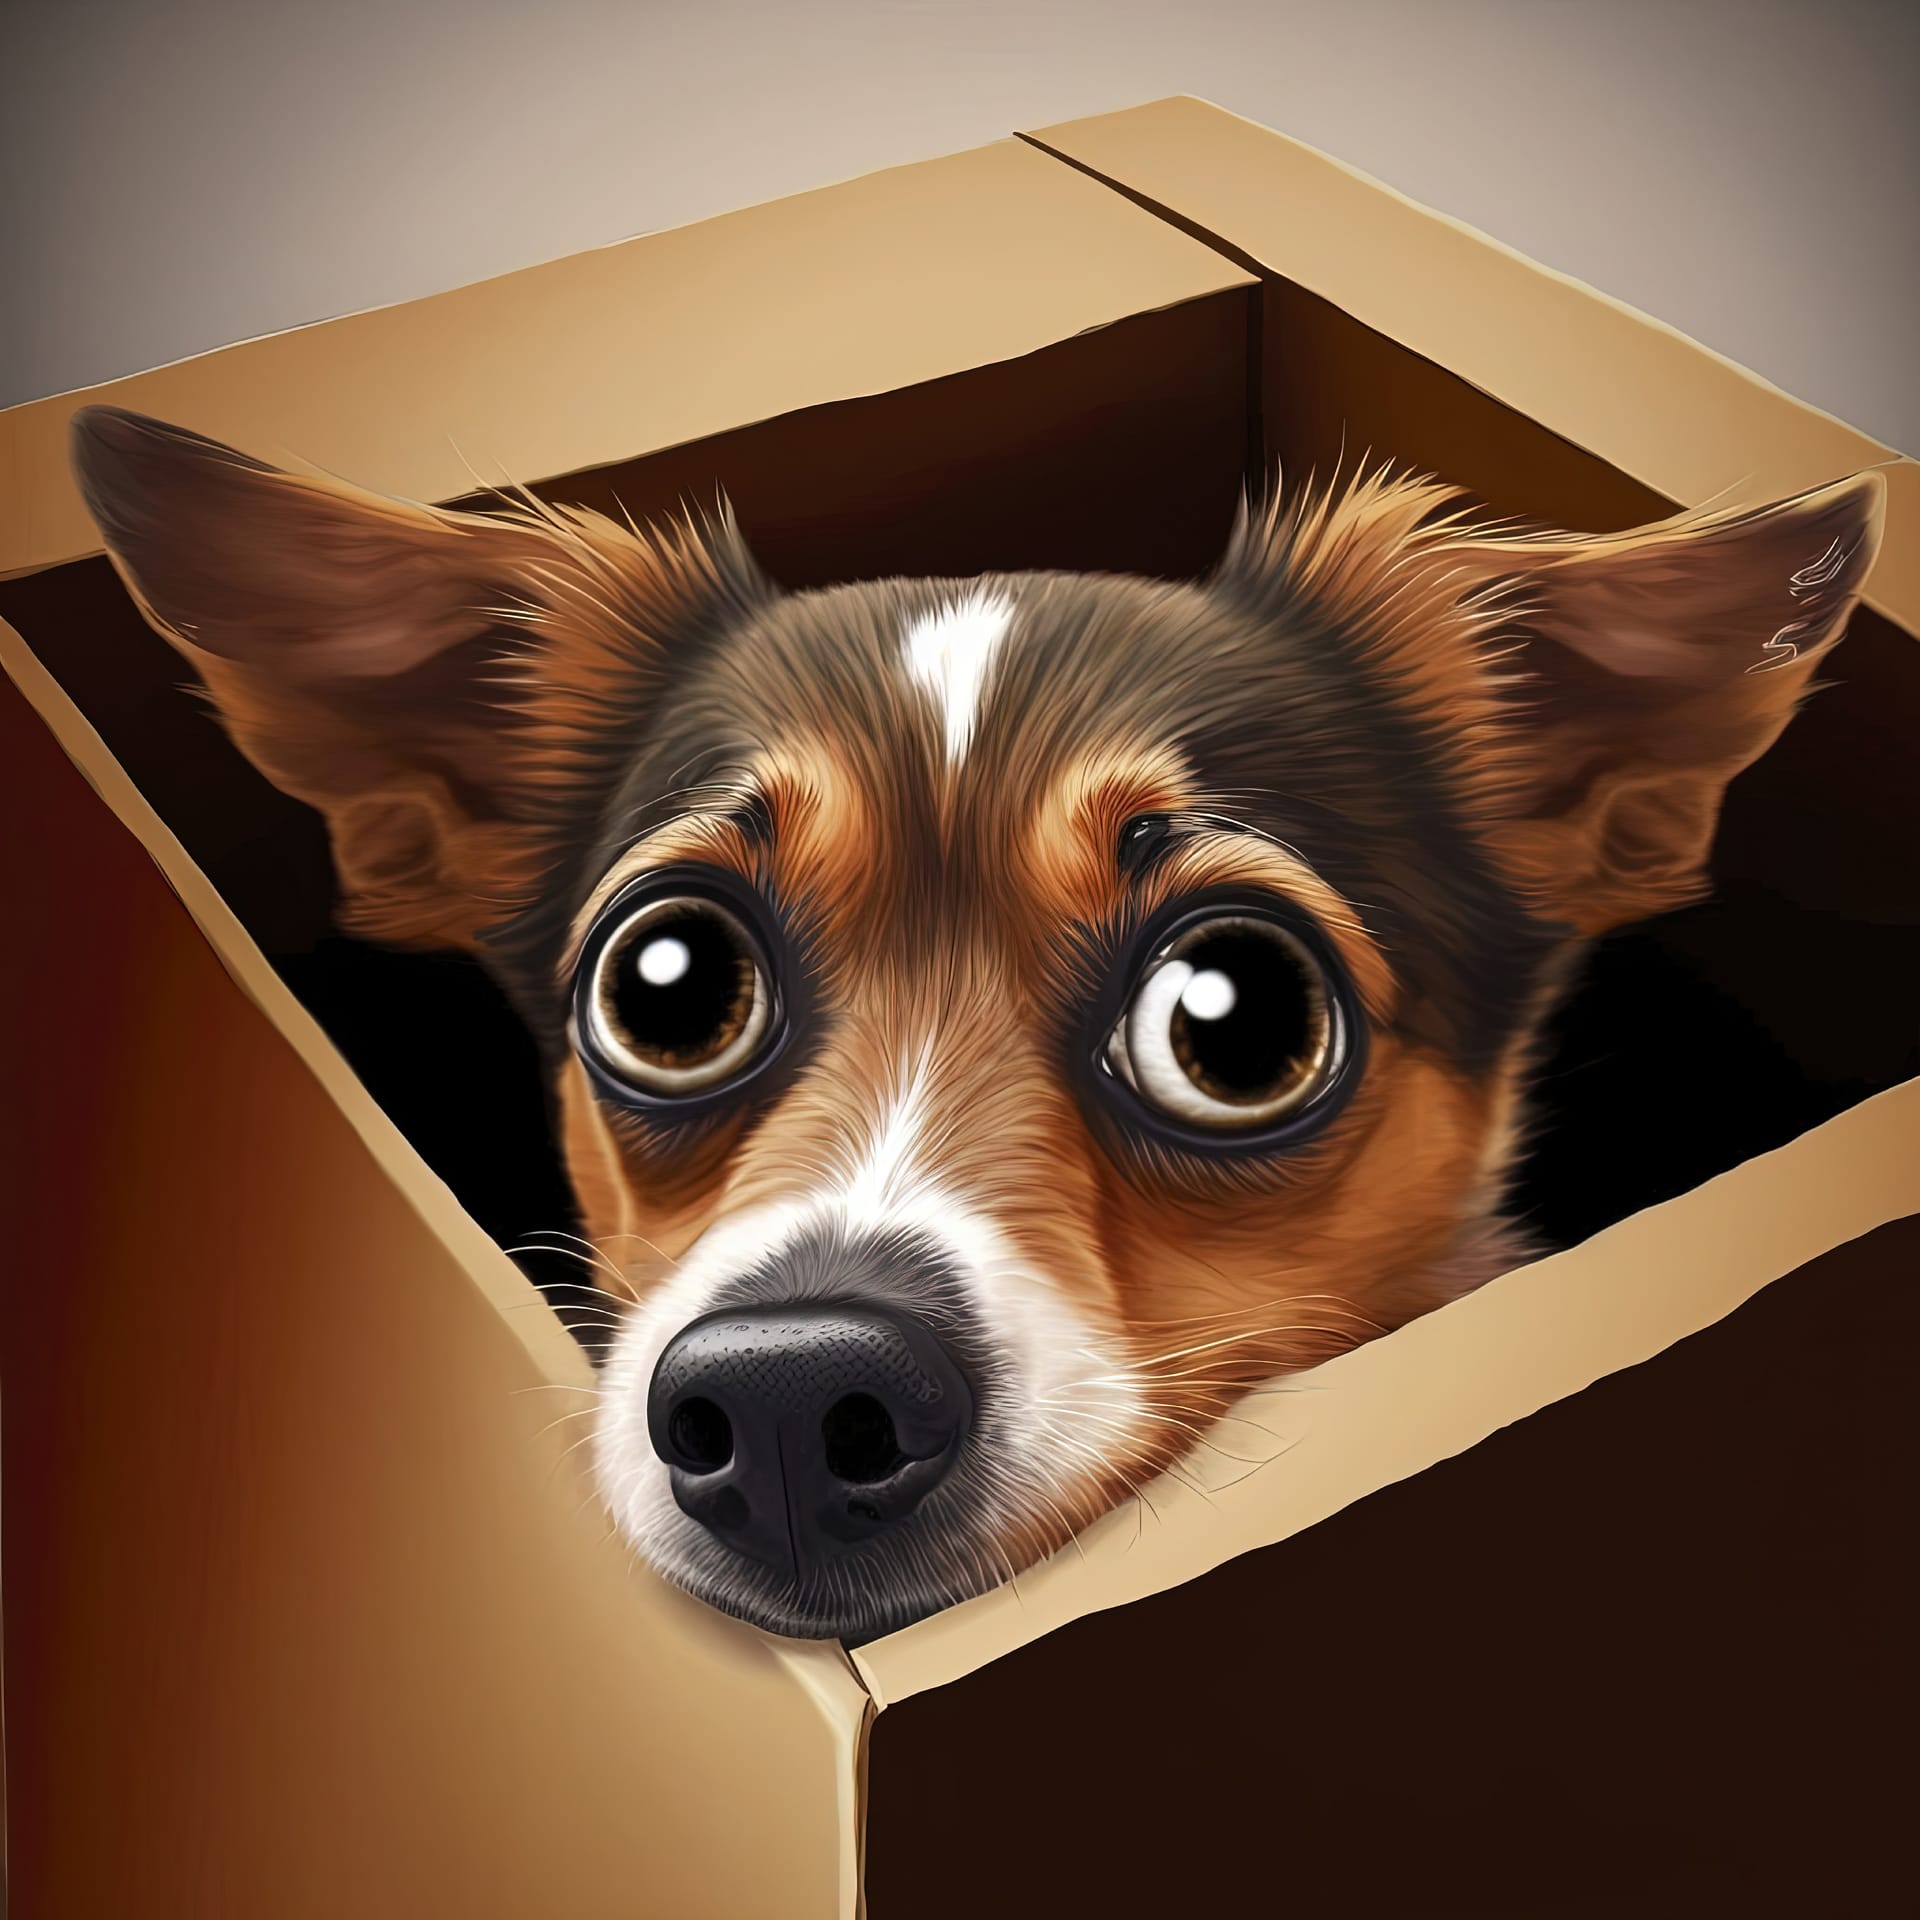 Dog hiding box huge anime eyes